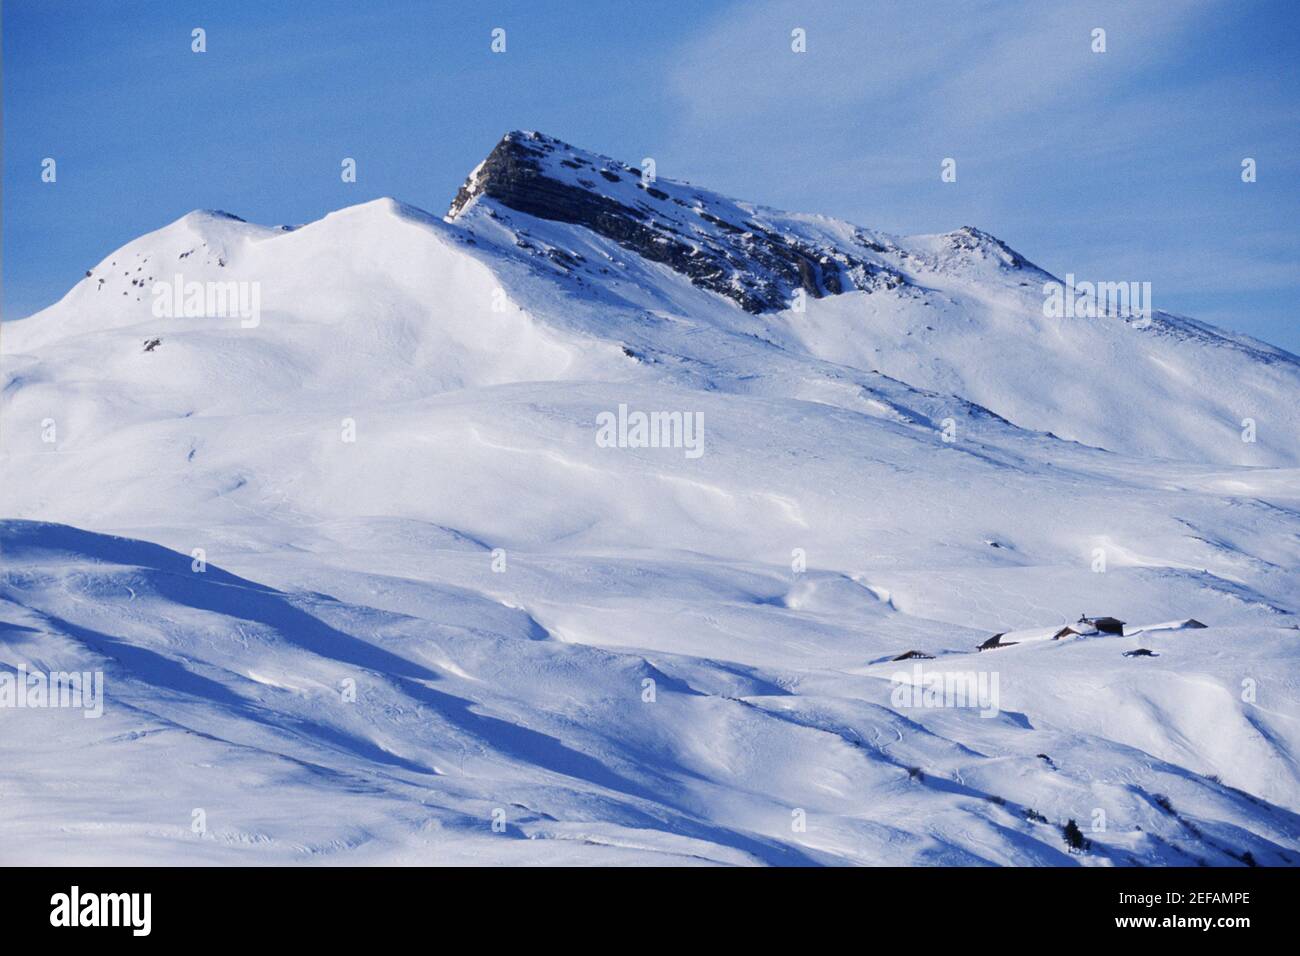 Low angle view of a snowcapped mountain, Swiss Alps, Davos, Graubunden Canton, Switzerland Stock Photo